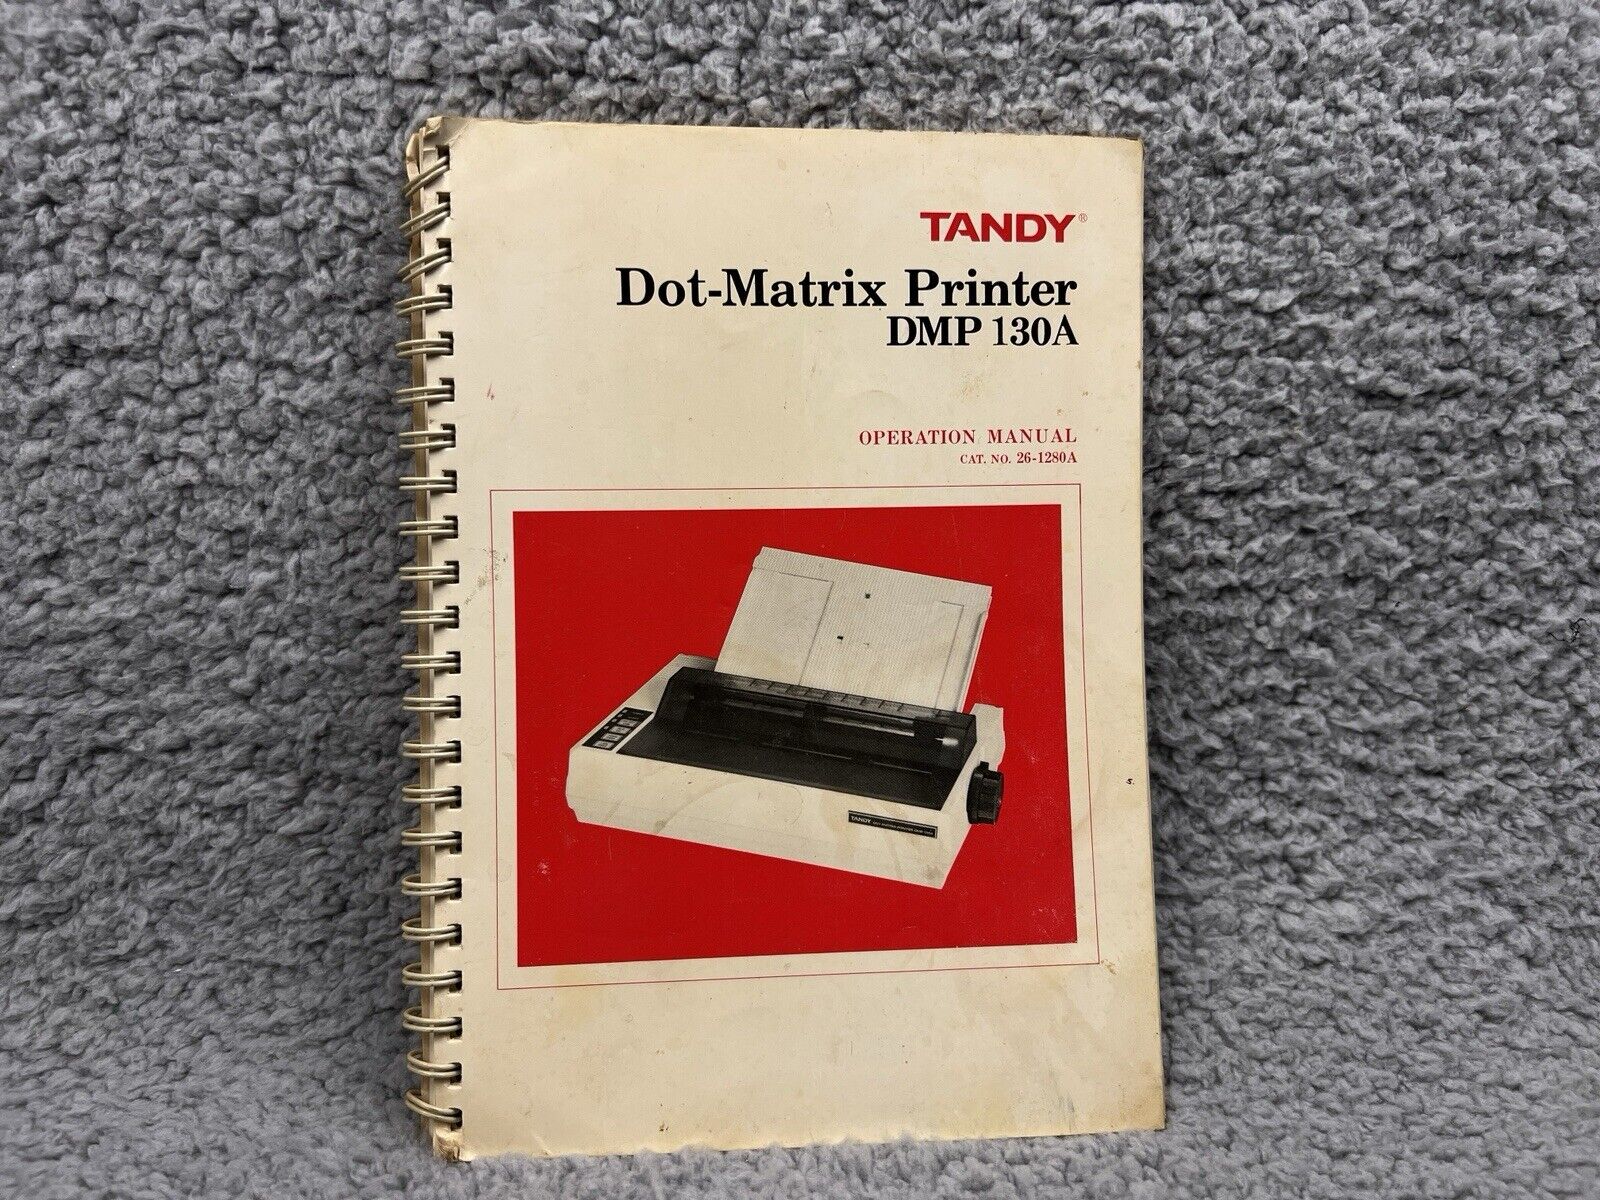 Tandy Dot-Matrix Printer DMP 130A Operation Manual Vintage